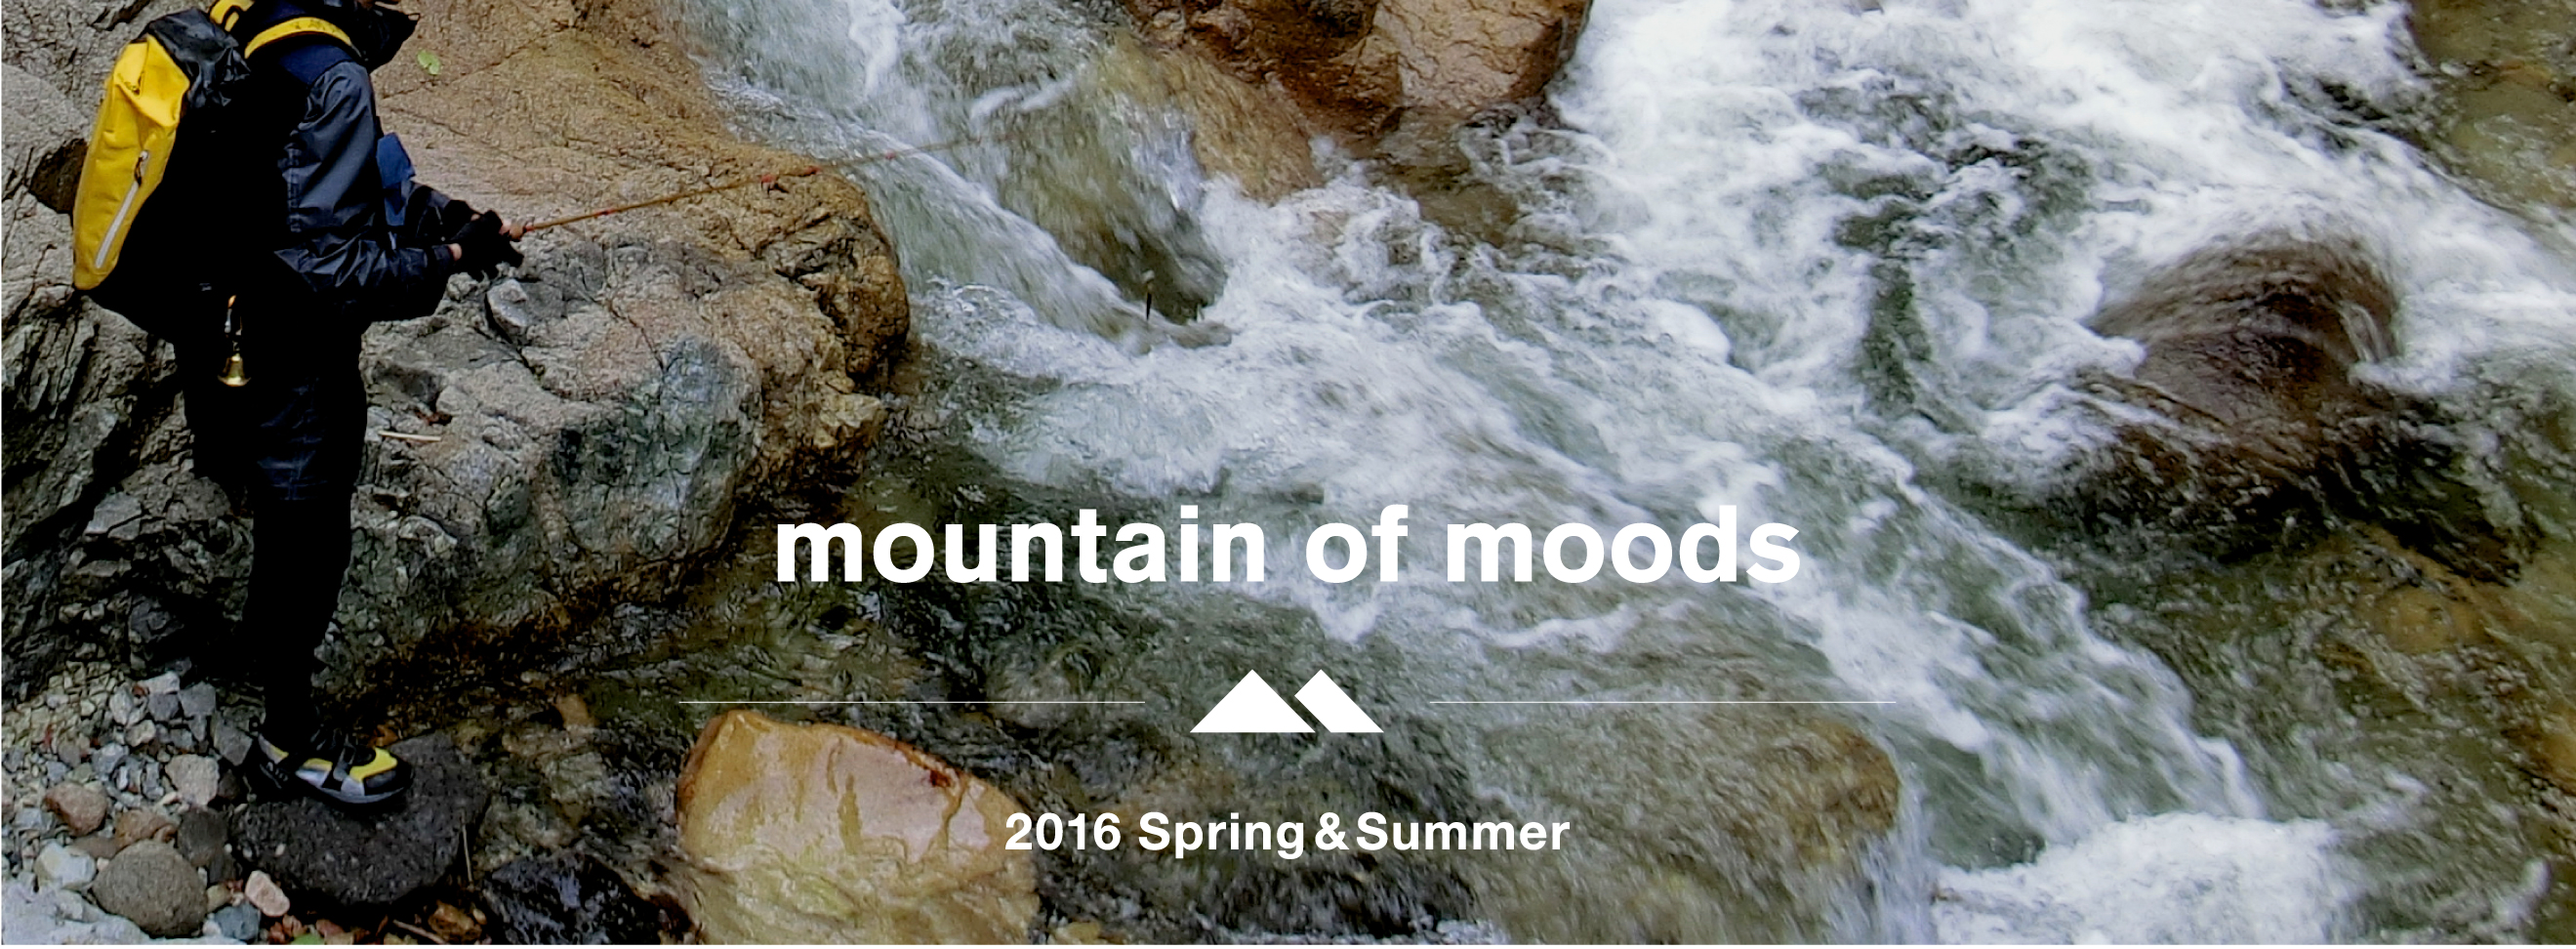 mountain of moods